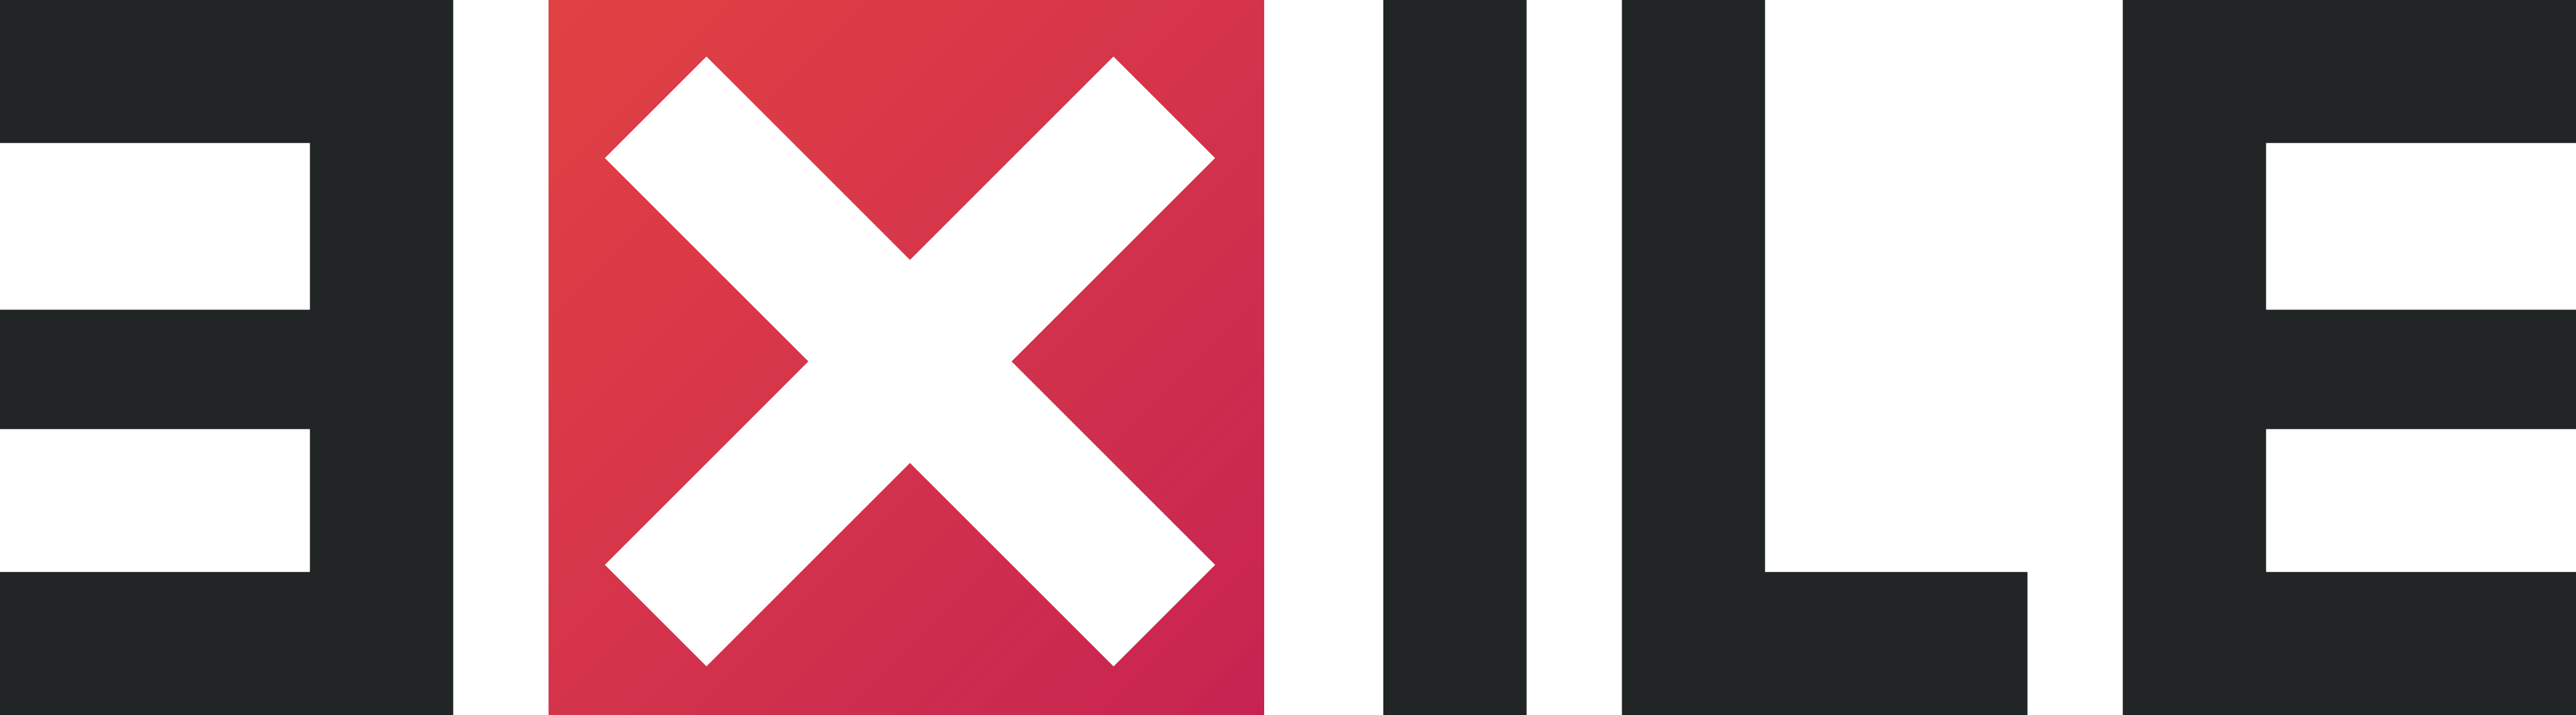 Exil-Mod-Logo